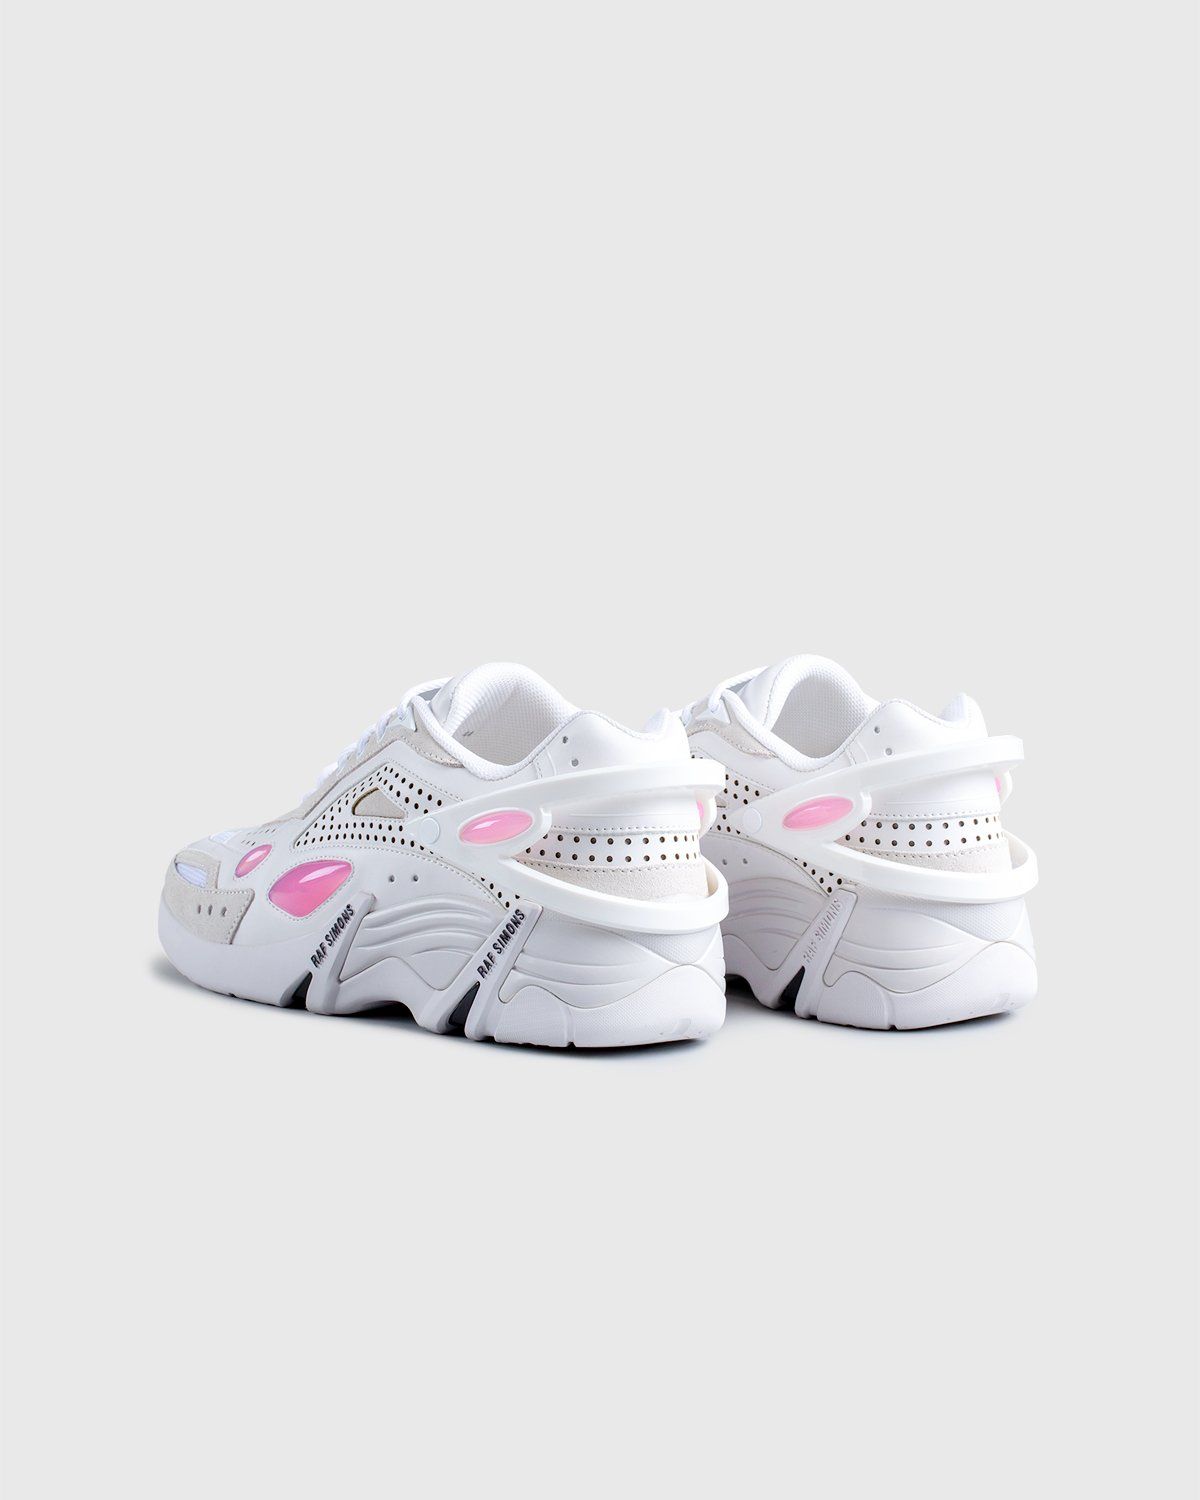 Raf Simons – Cylon White - Low Top Sneakers - White - Image 4